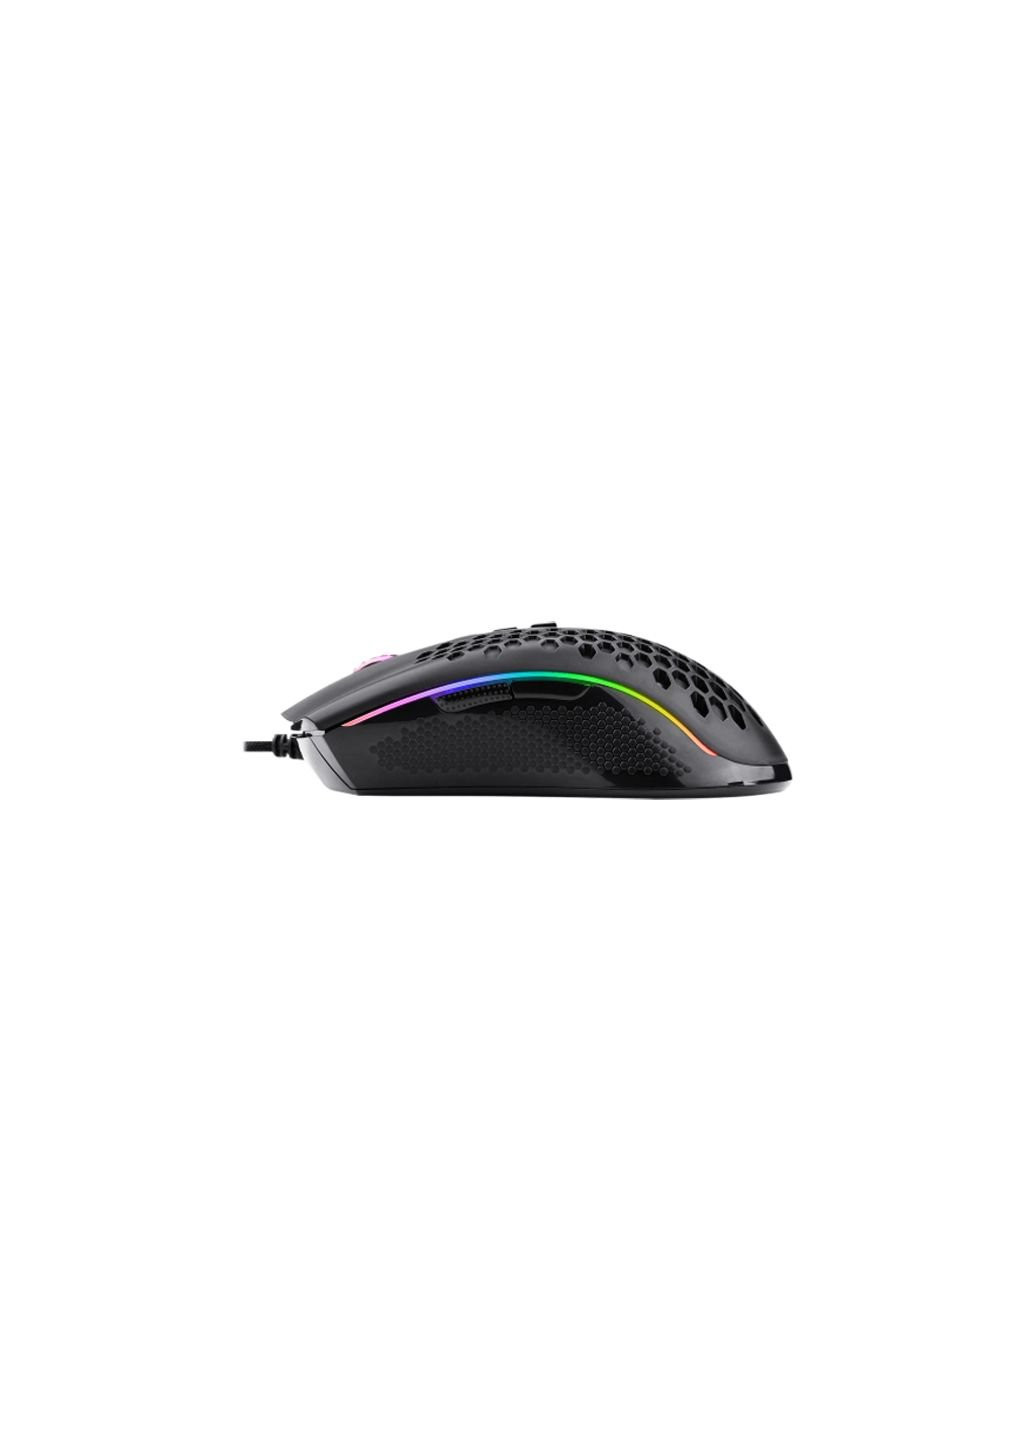 Мышка Storm Elite 16000dpi RGB USB Black (77853) Redragon (253547312)